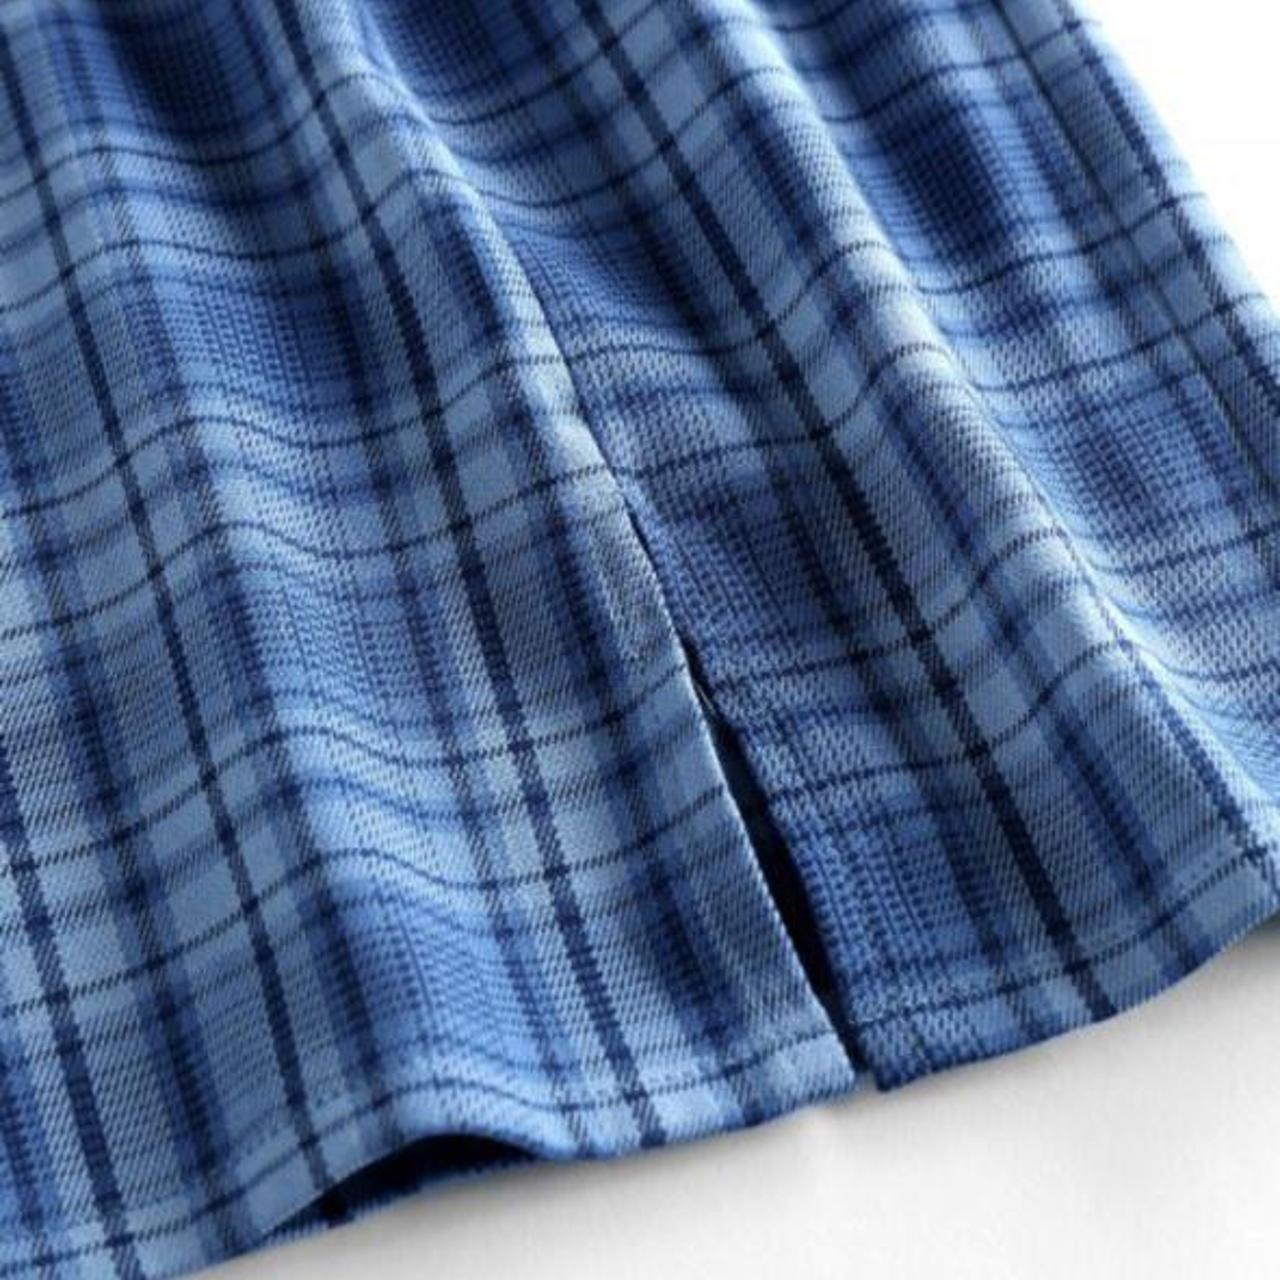 ZAFUL Women's Blue and Navy Skirt (3)